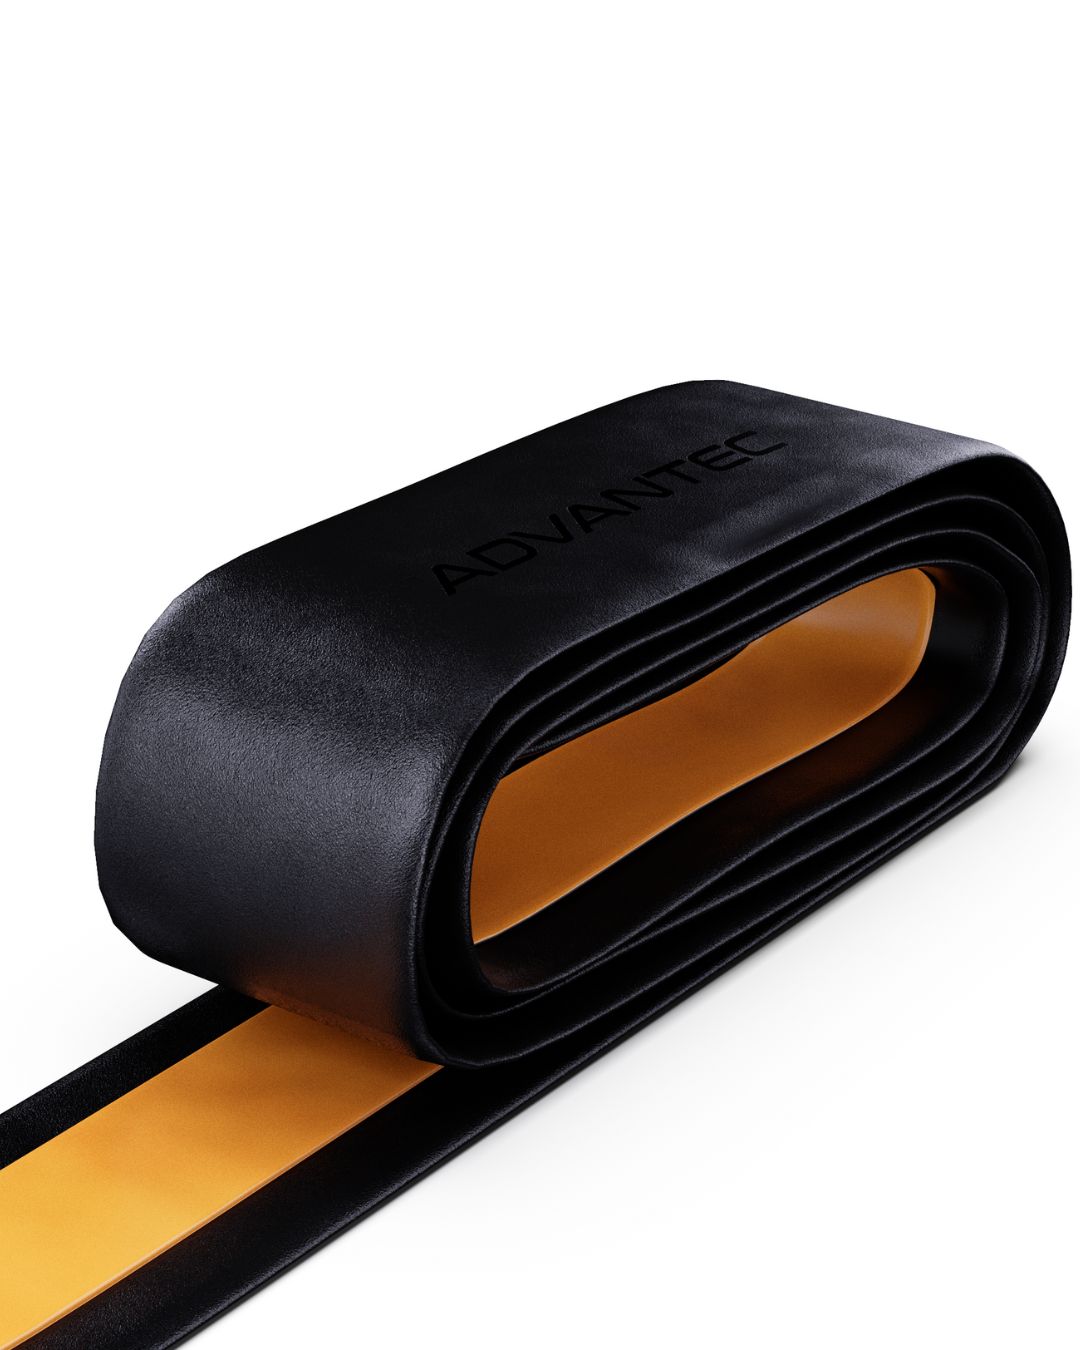 VT Advantec Leather Anti-Vibration Shock Absorption Tennis Grip